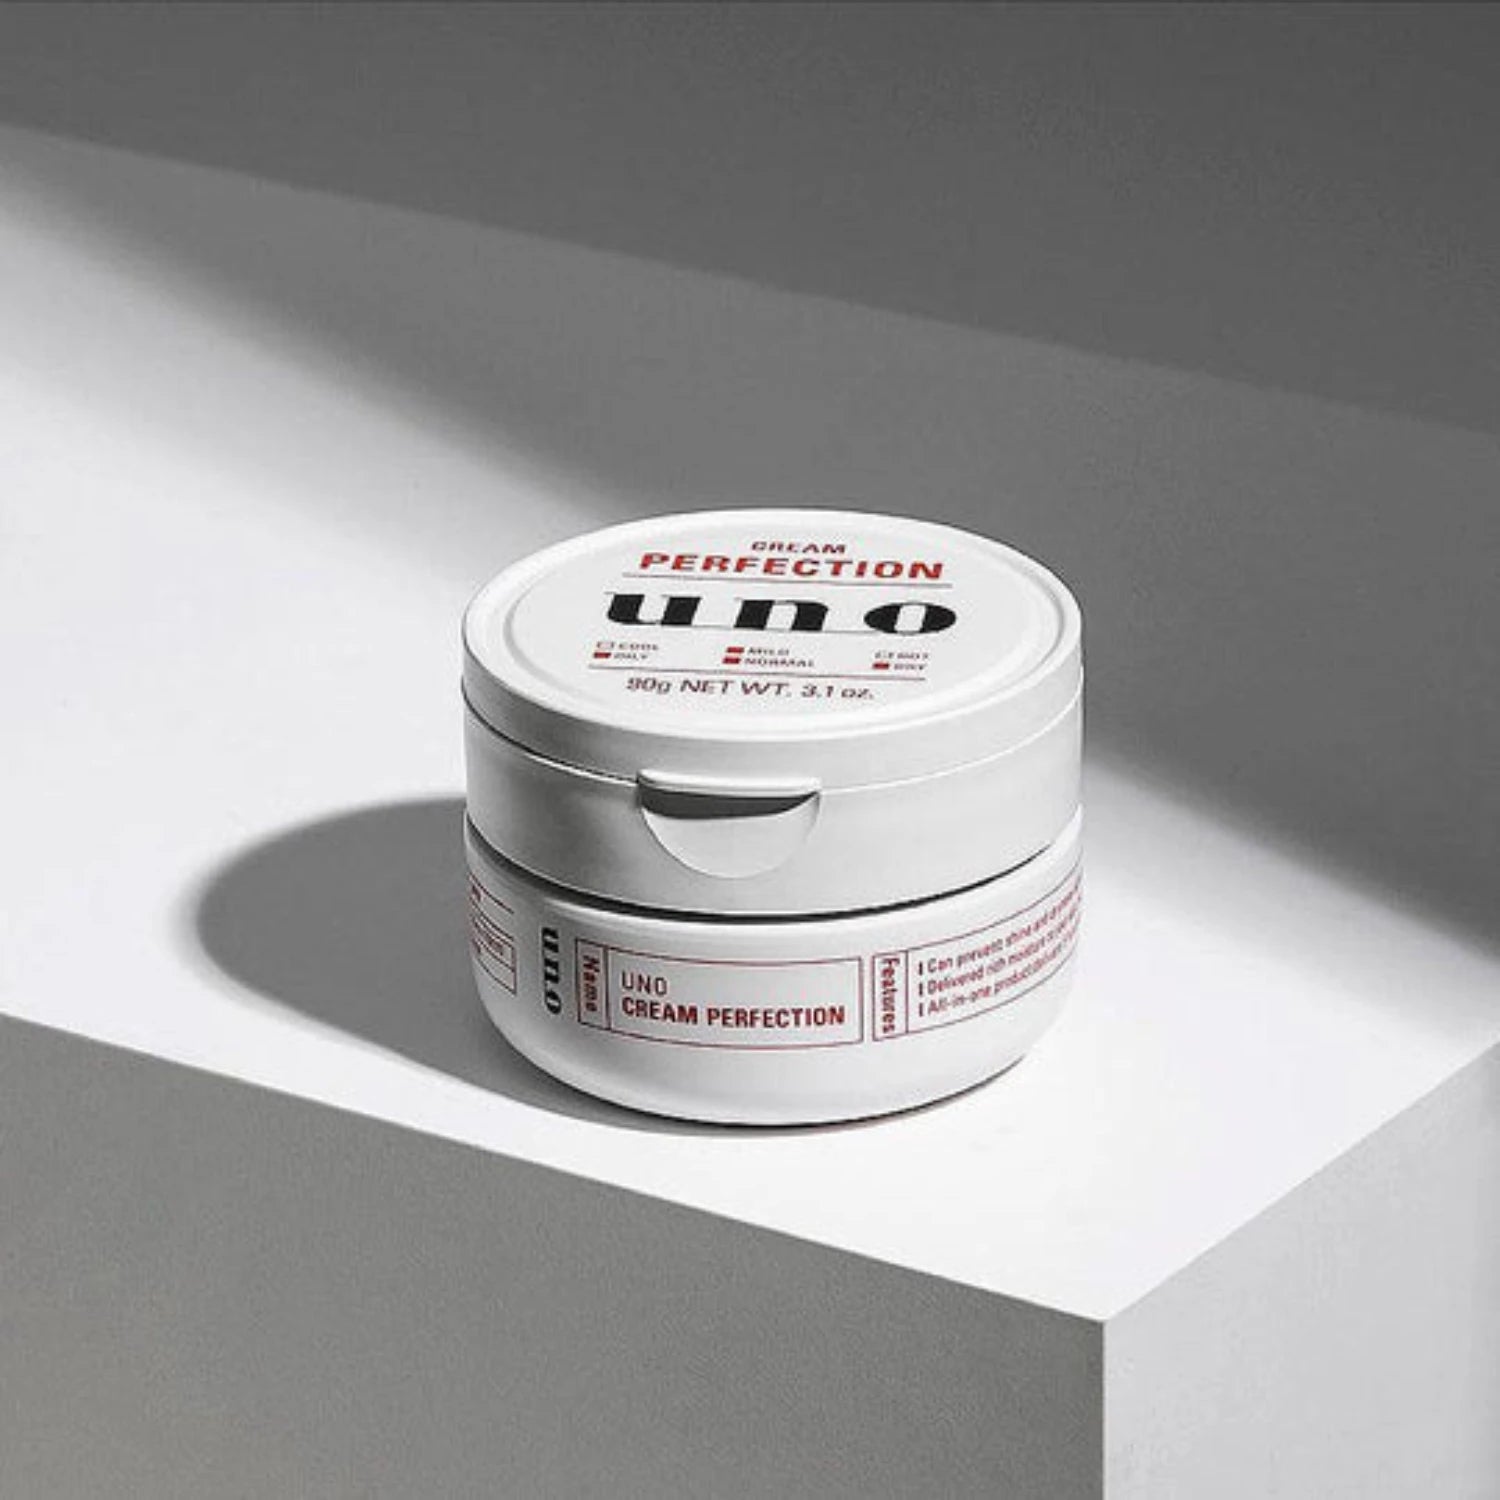 Shiseido Uno for Men Cream Perfection 90g - Buy Me Japan